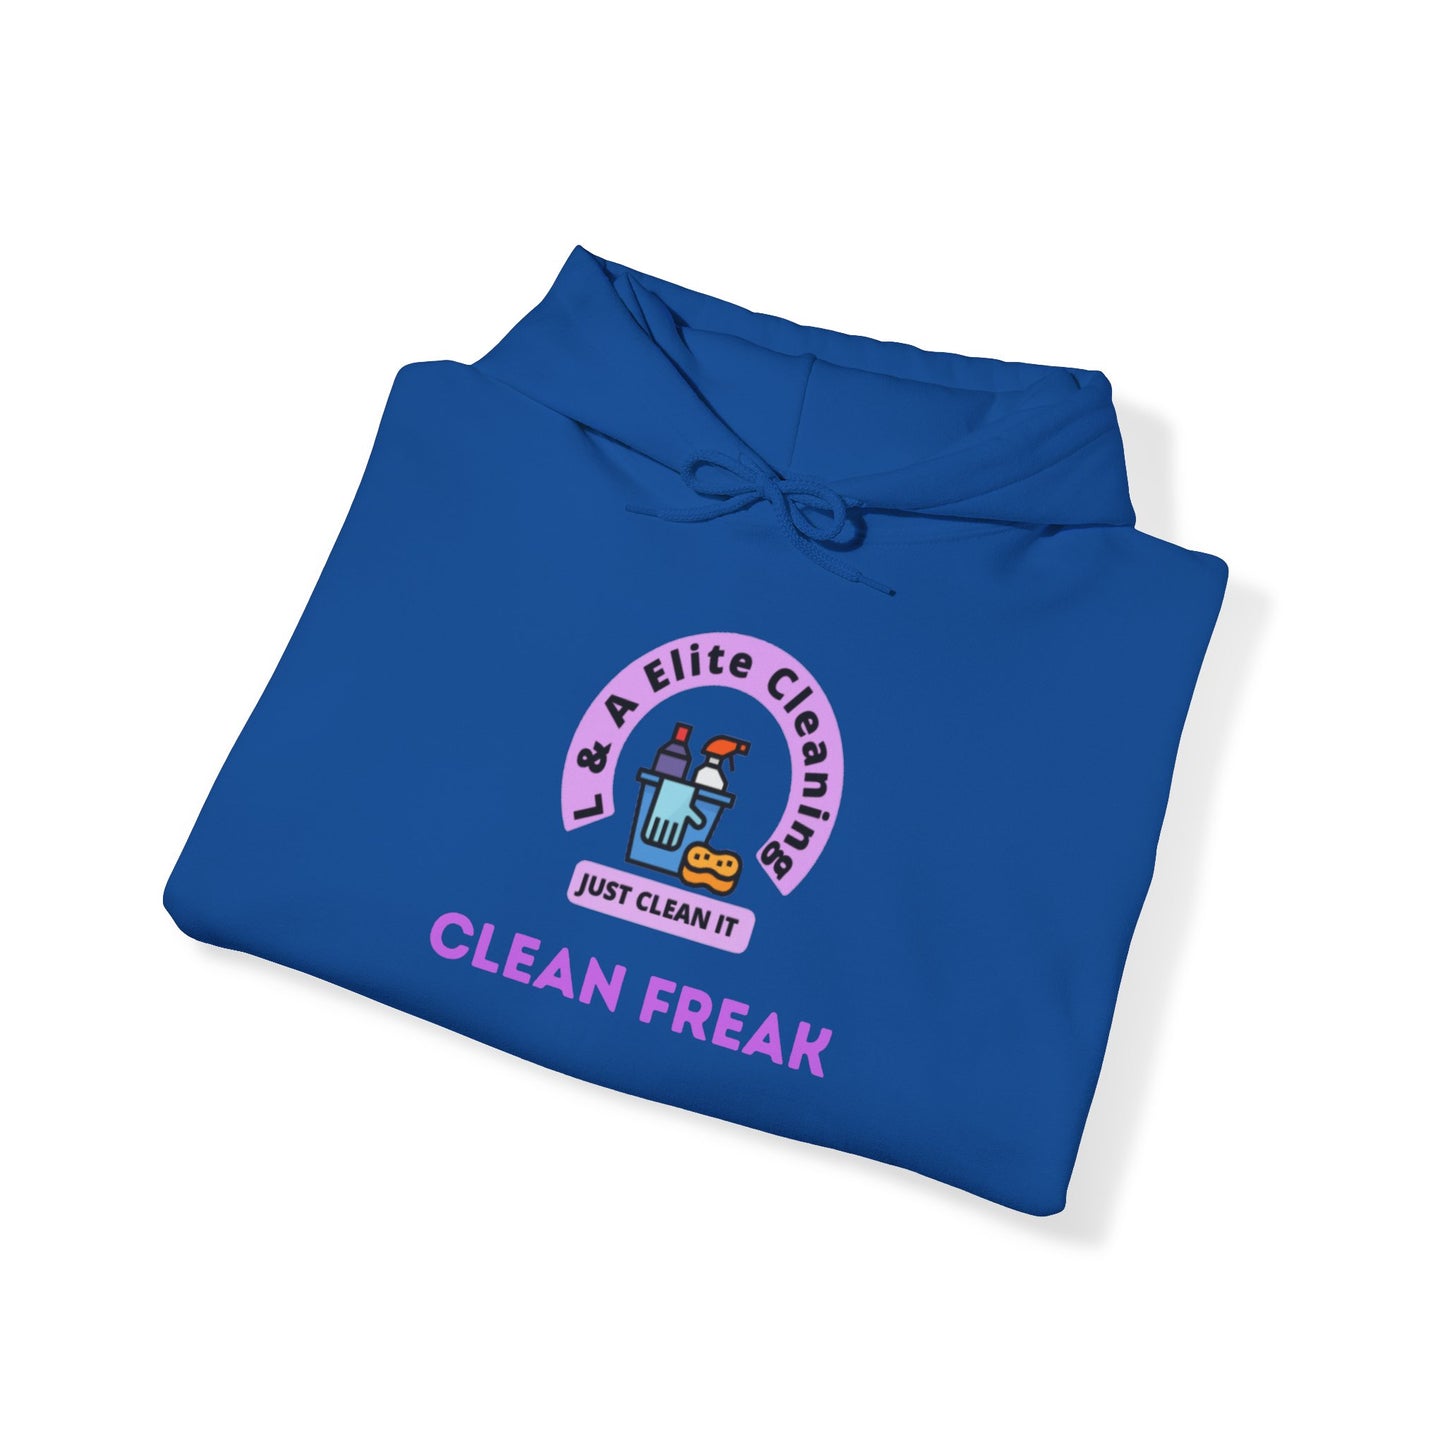 Clean Freak Sweatshirt